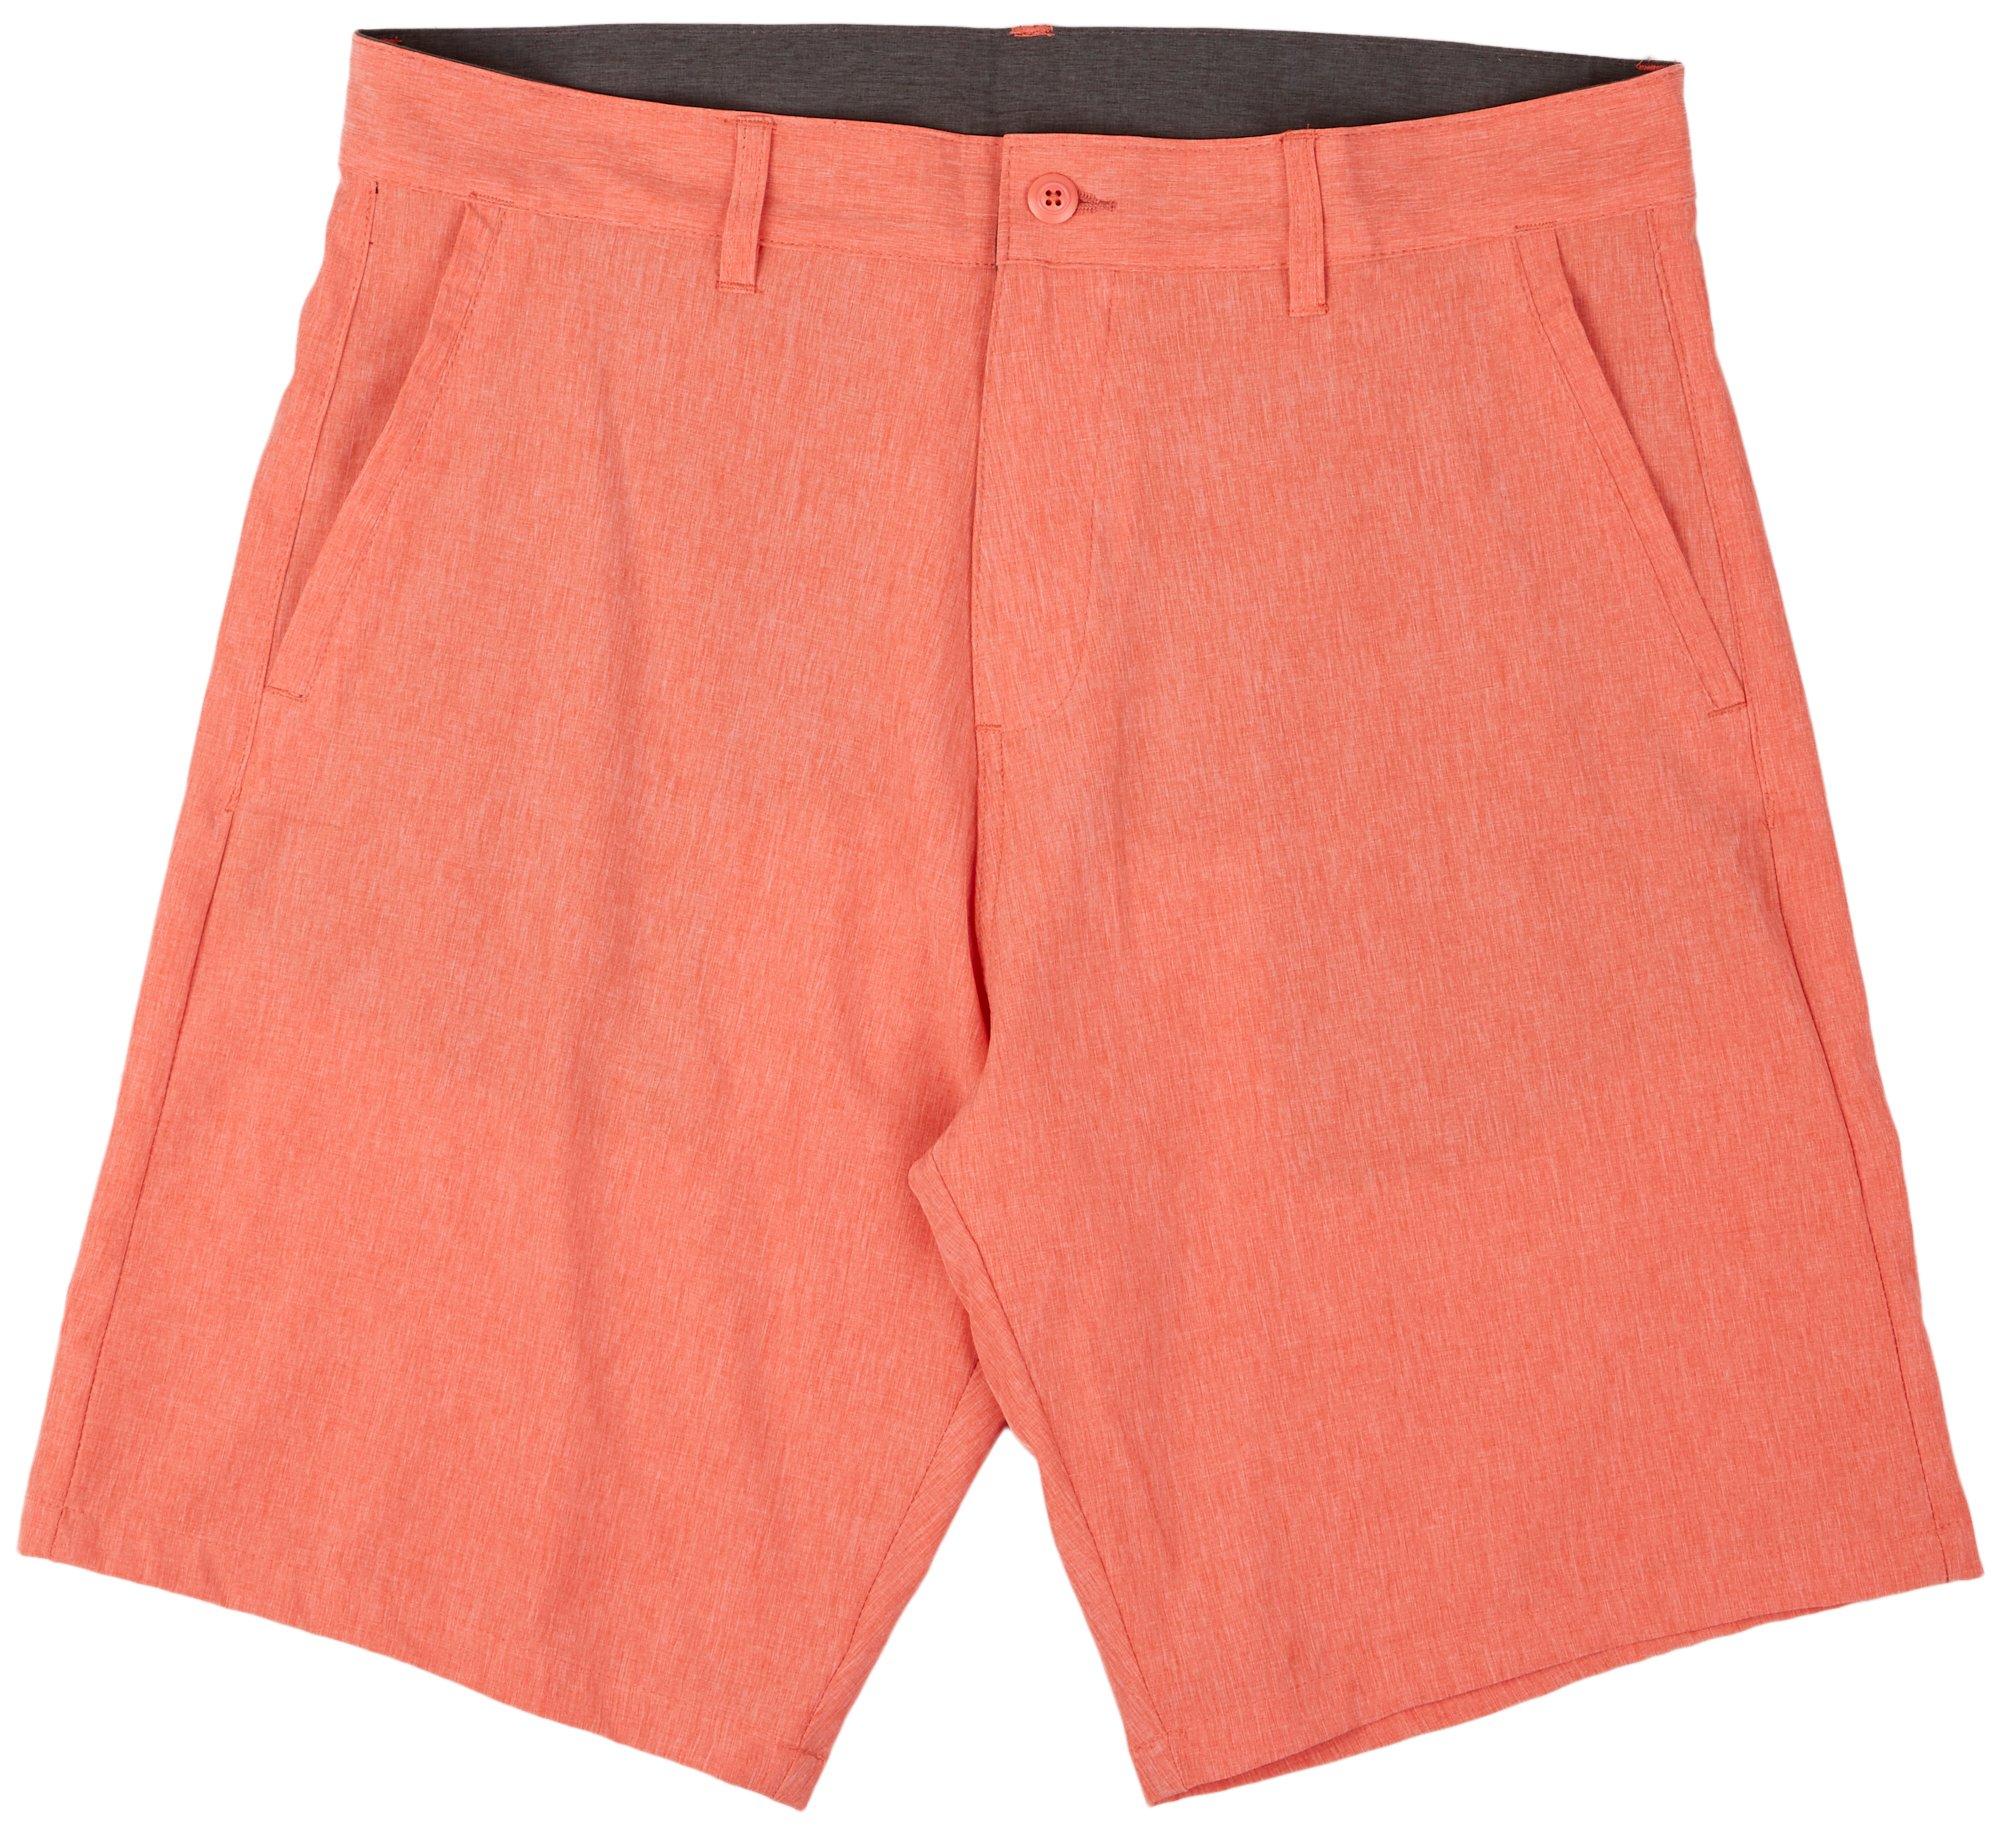 Anglers Edge Sand Fishing Shorts - Lowes Menswear